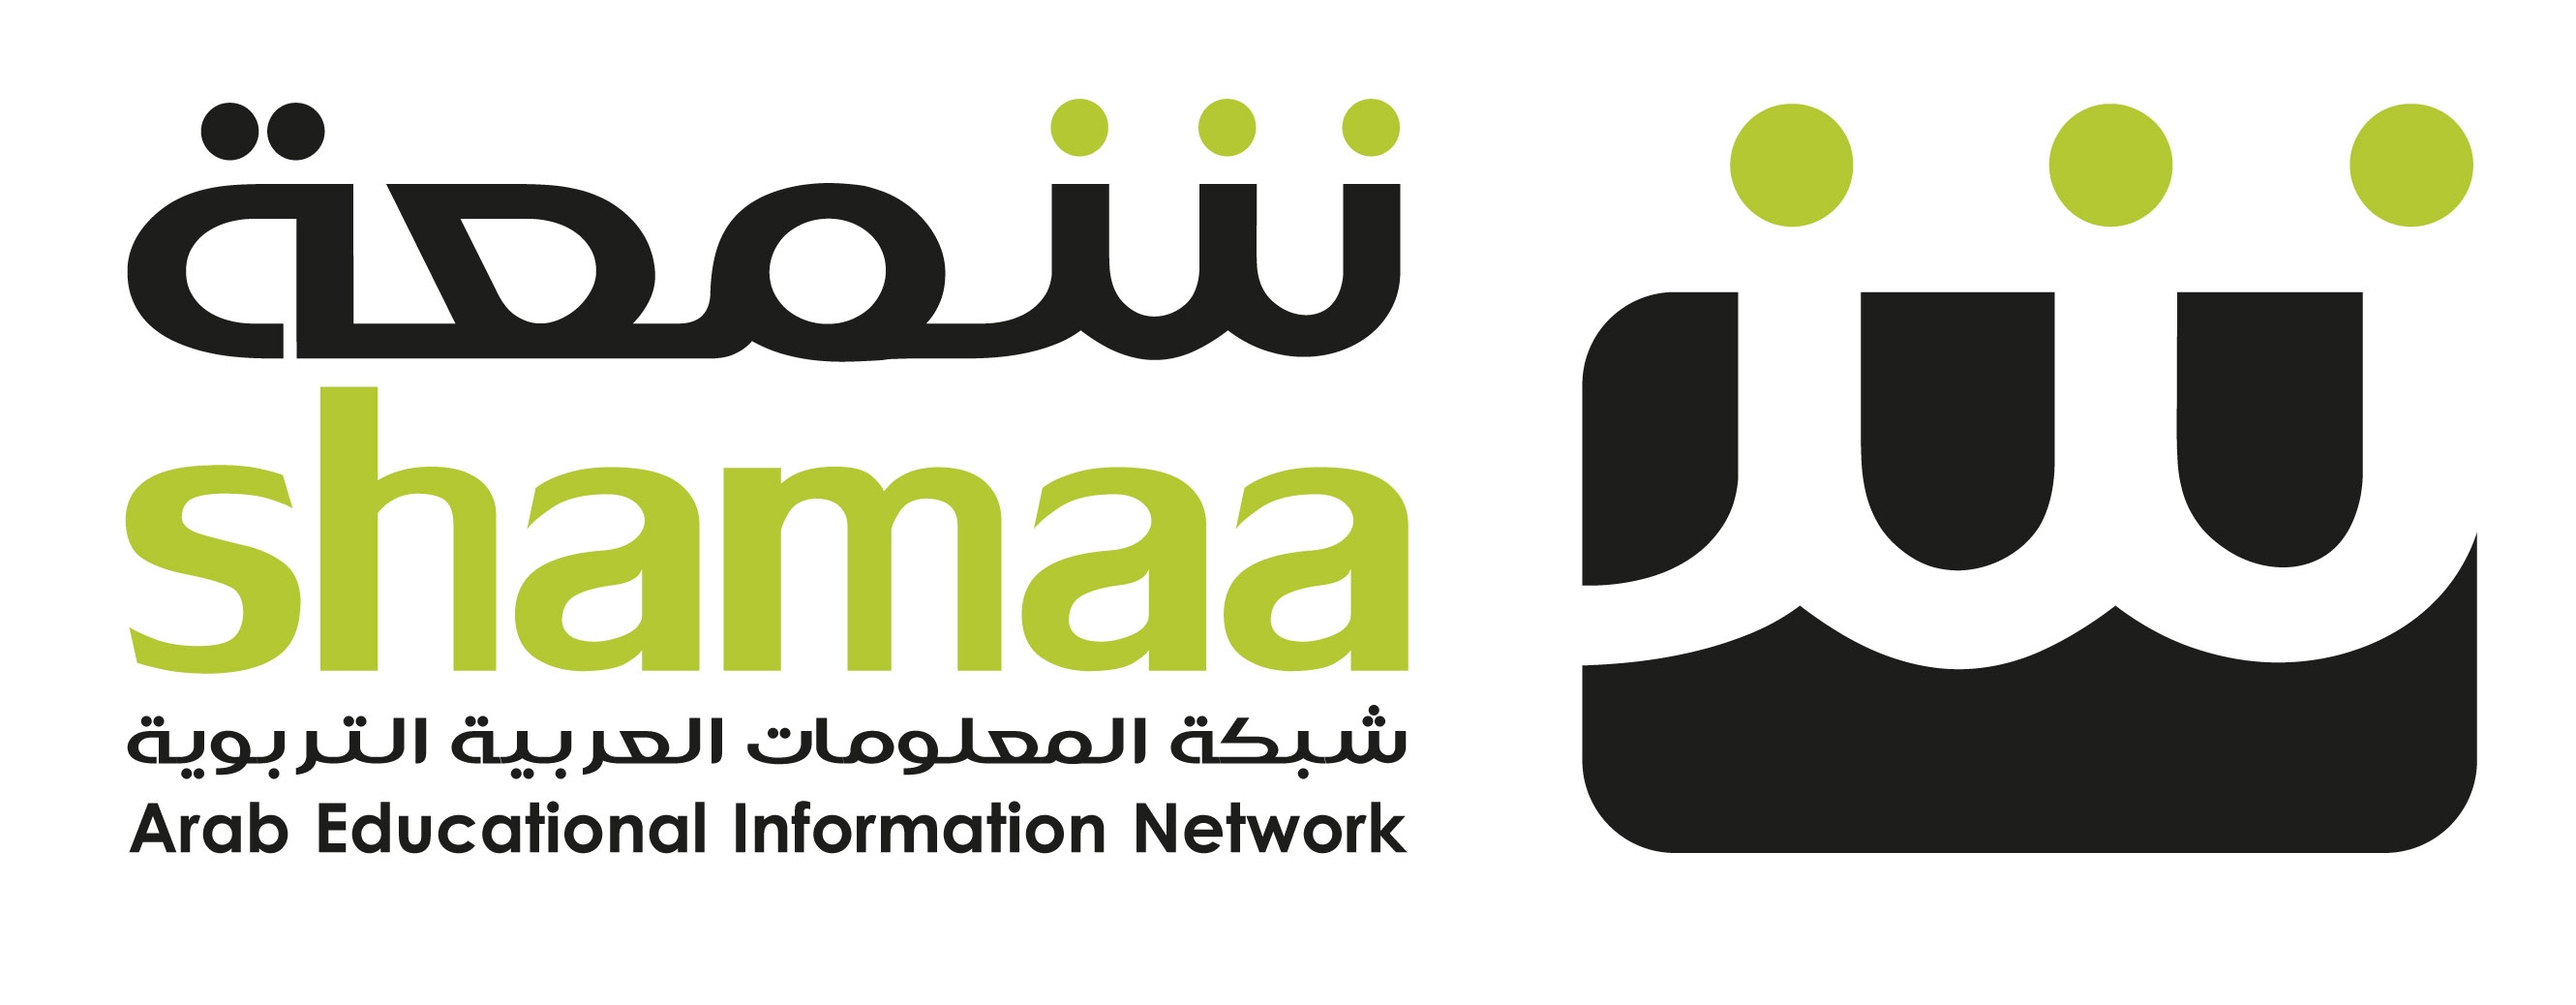 Shamaa Trading Logo photo - 1